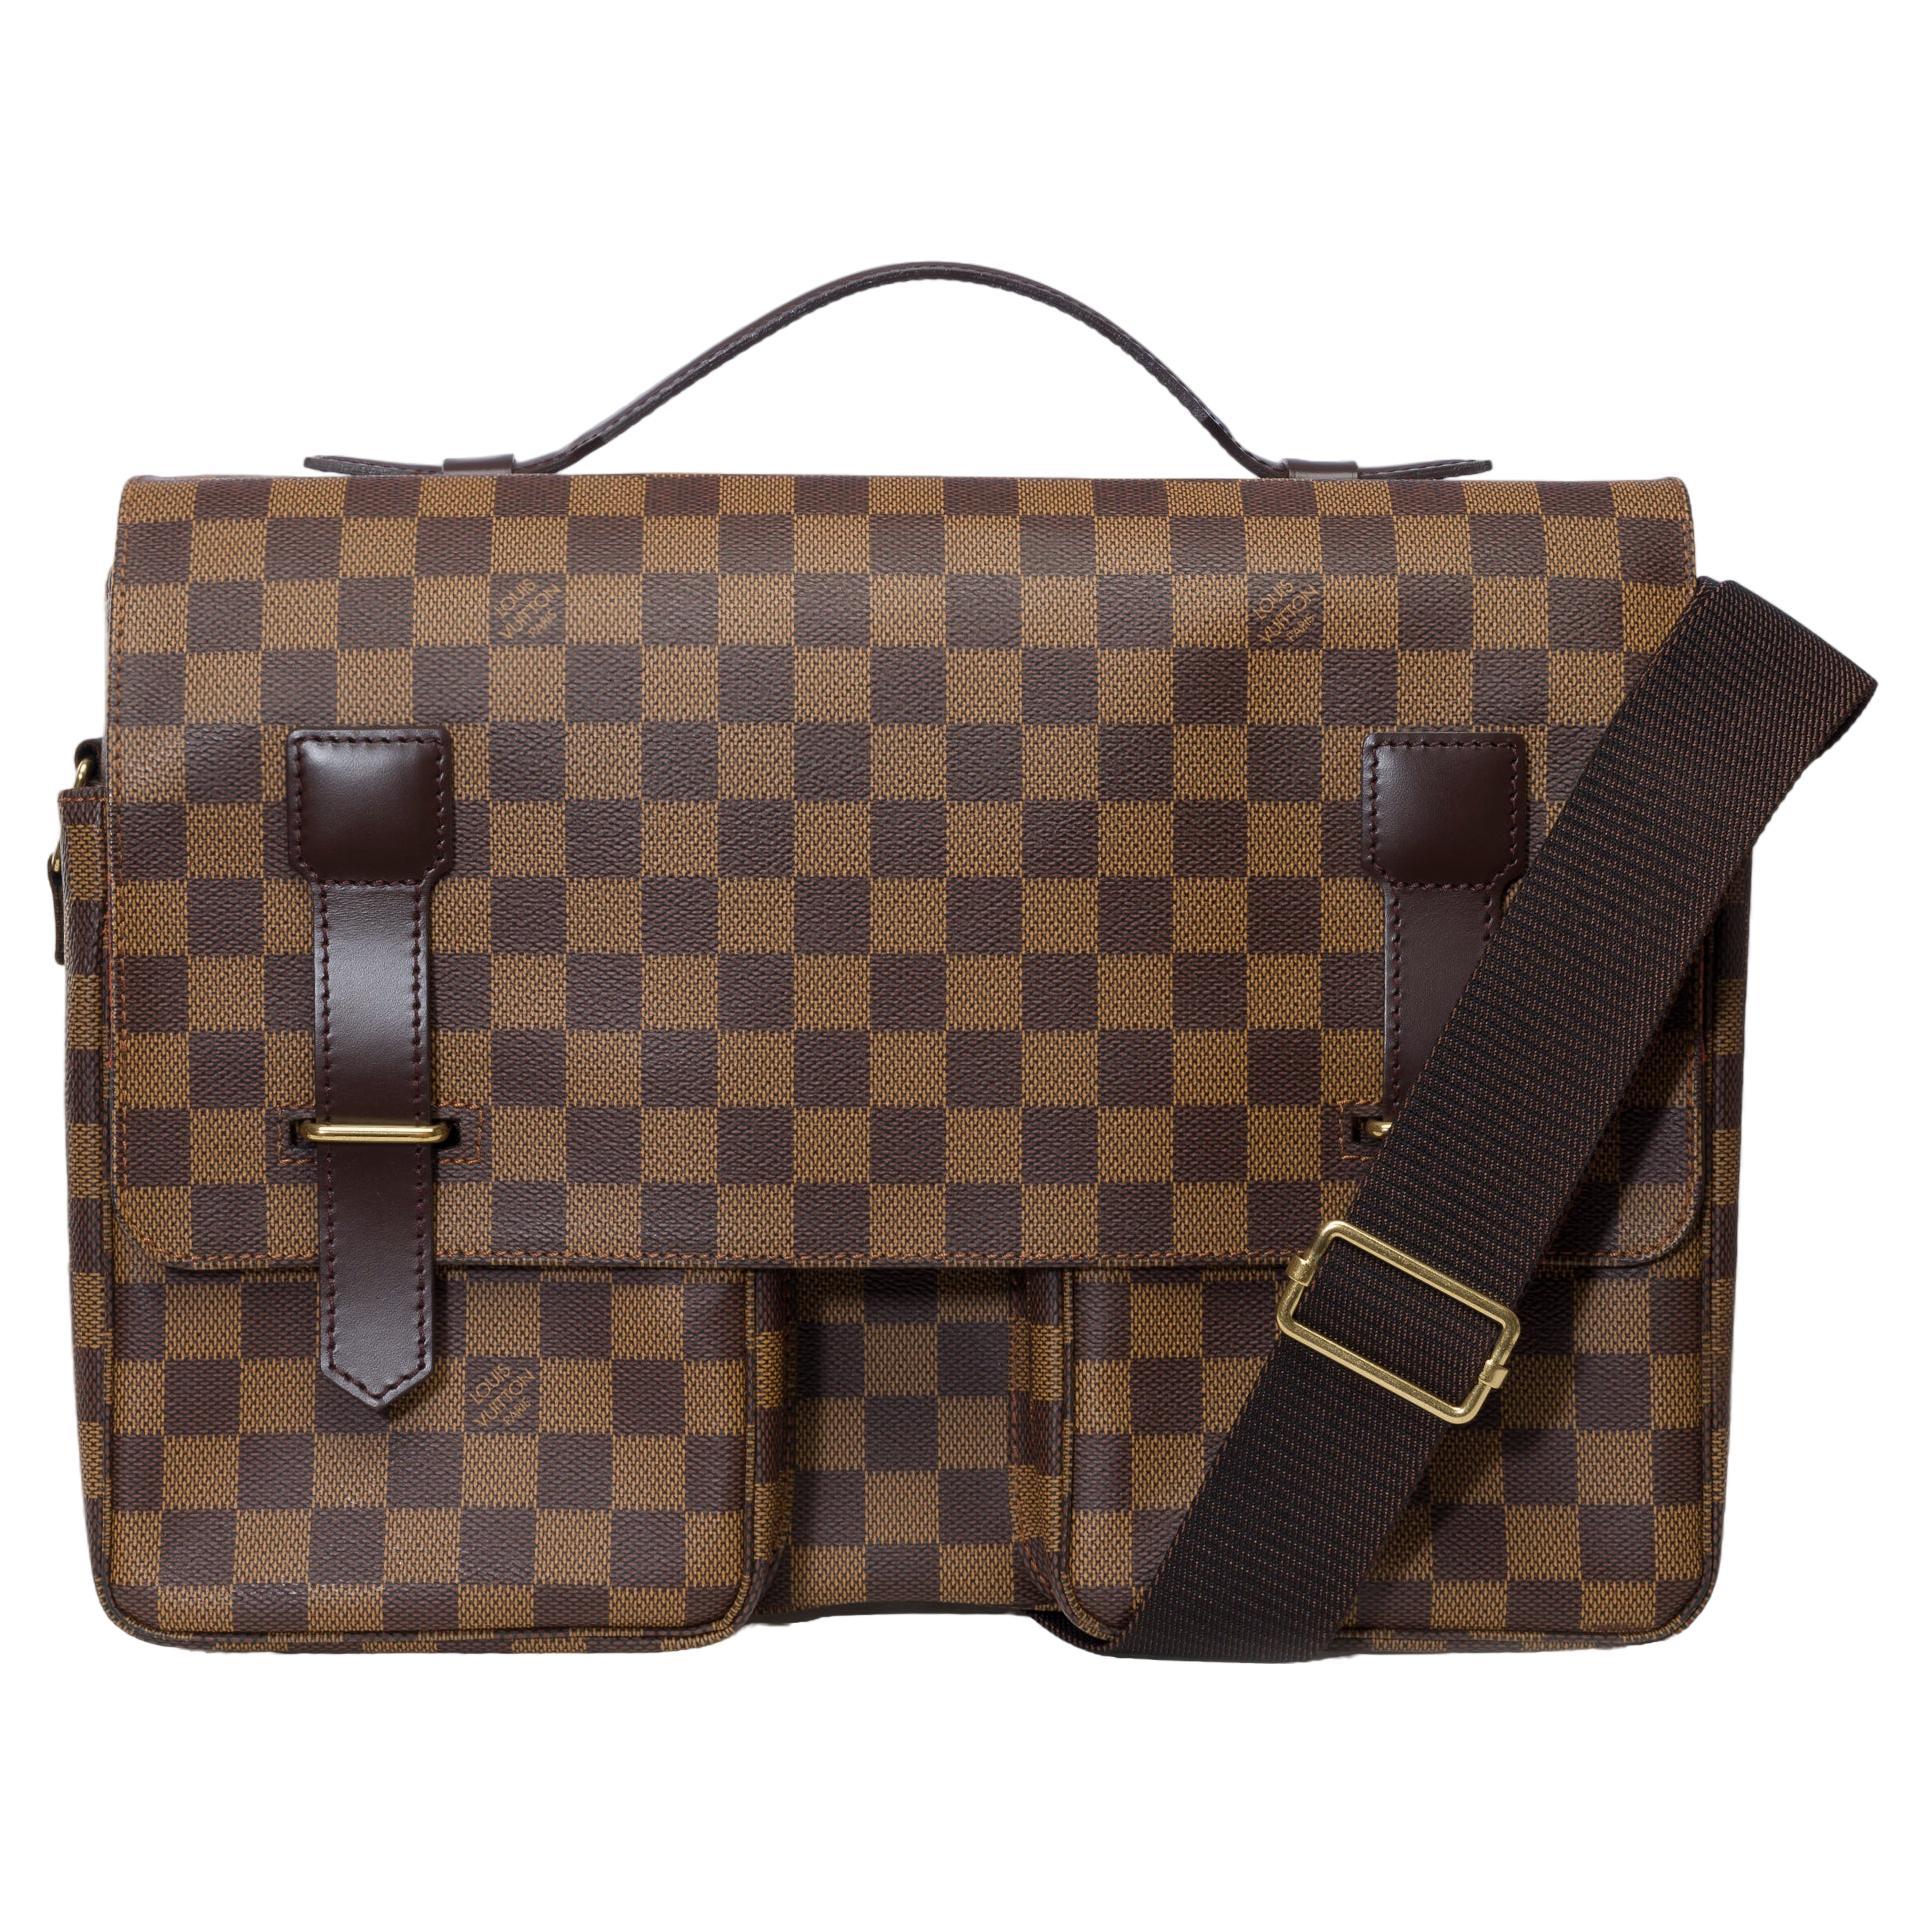 Classy Louis Vuitton Broadway Messenger shoulder bag in brown canvas, GHW